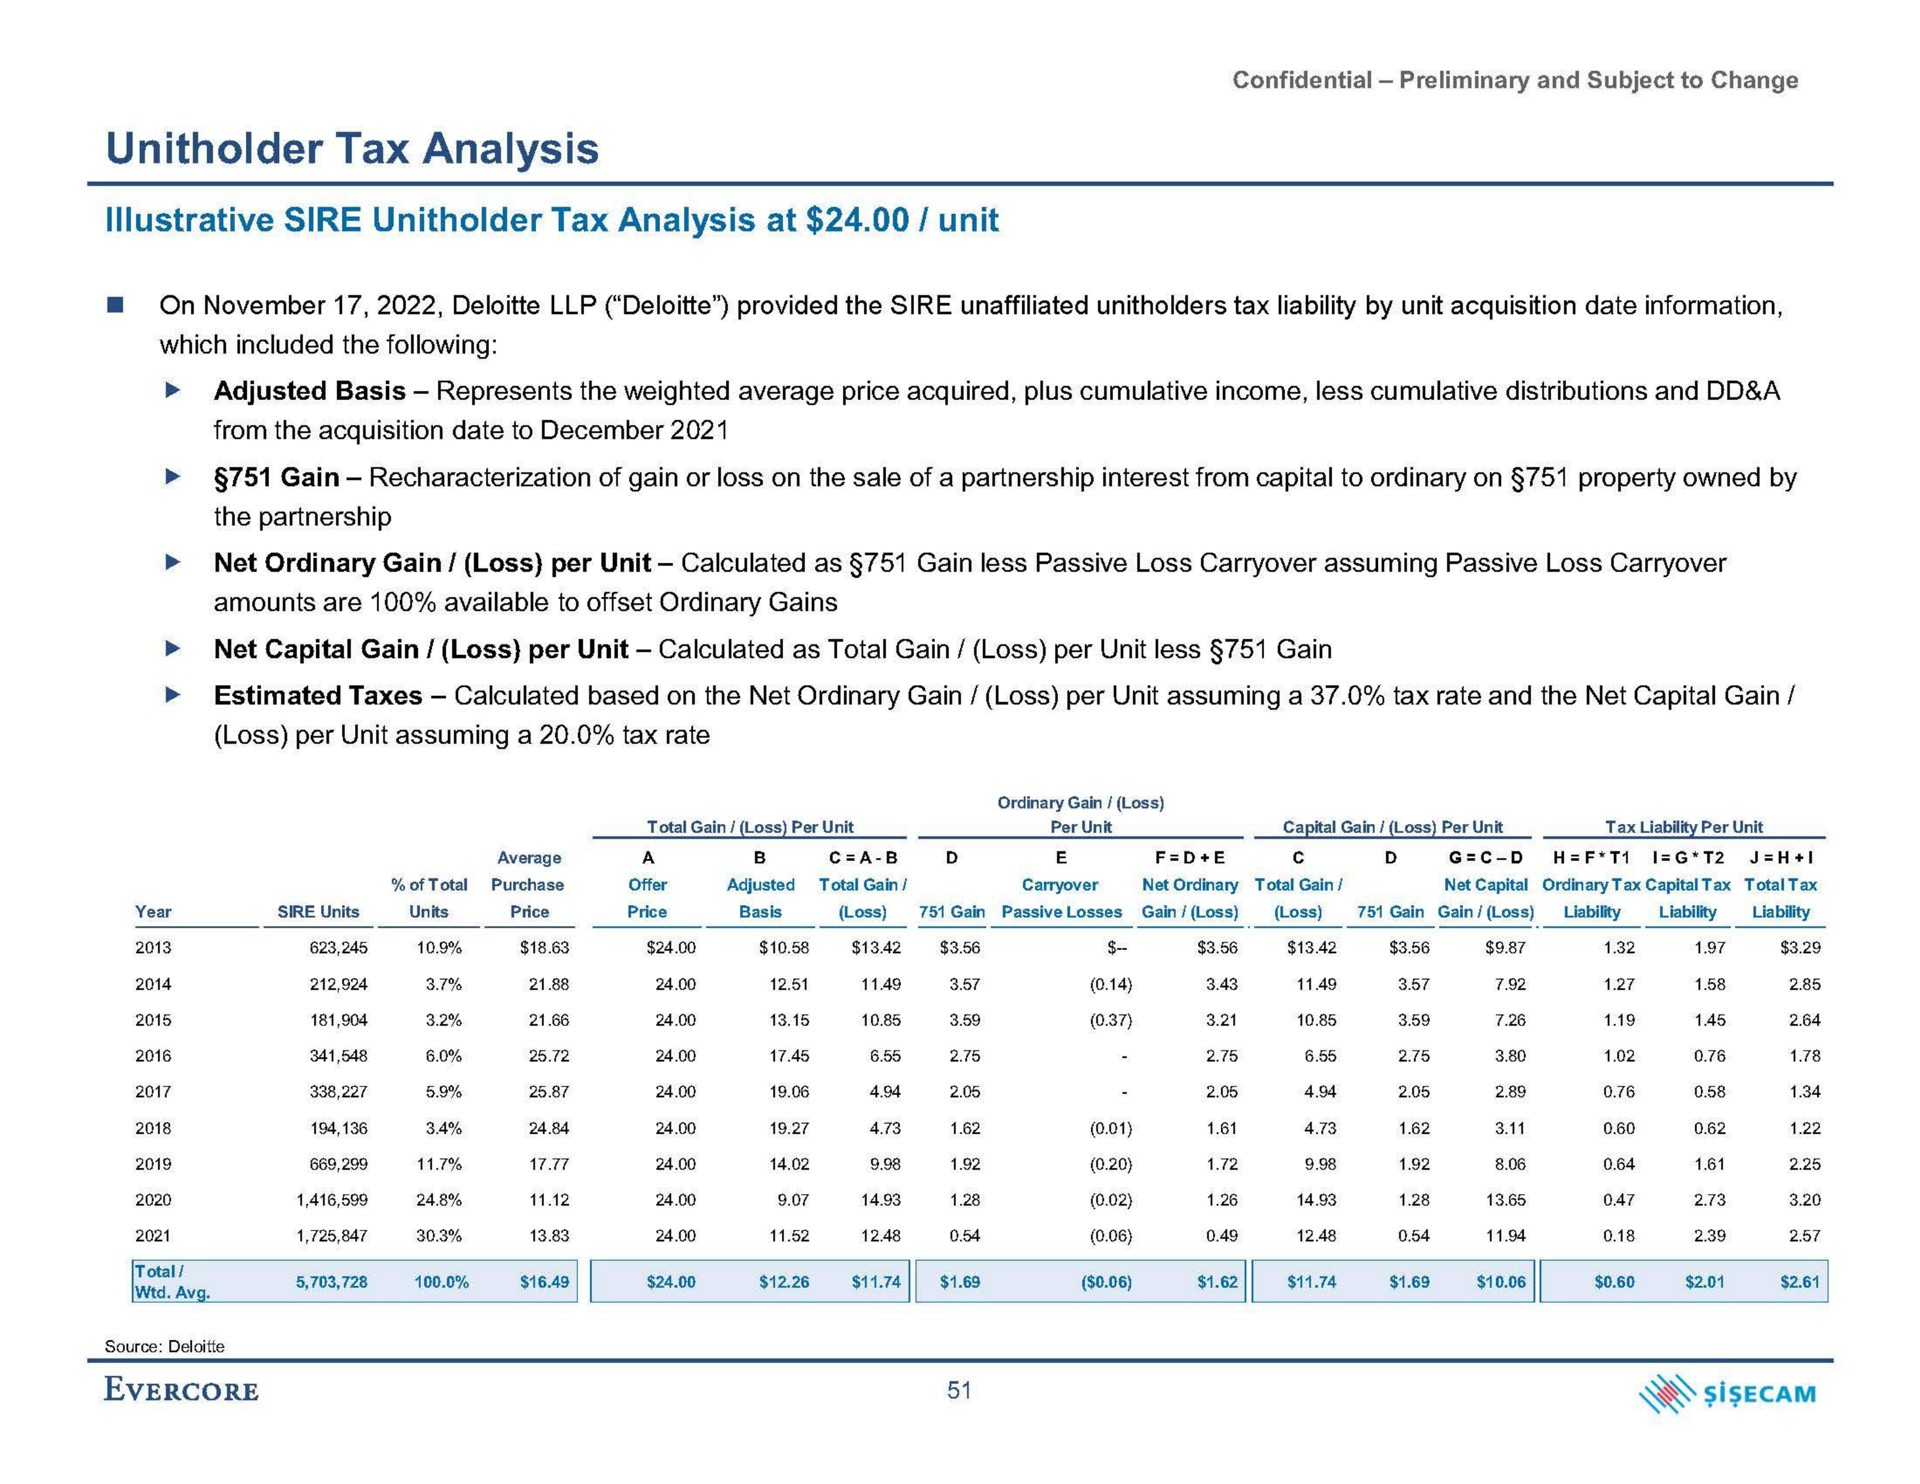 tax analysis illustrative sire tax analysis at unit | Evercore